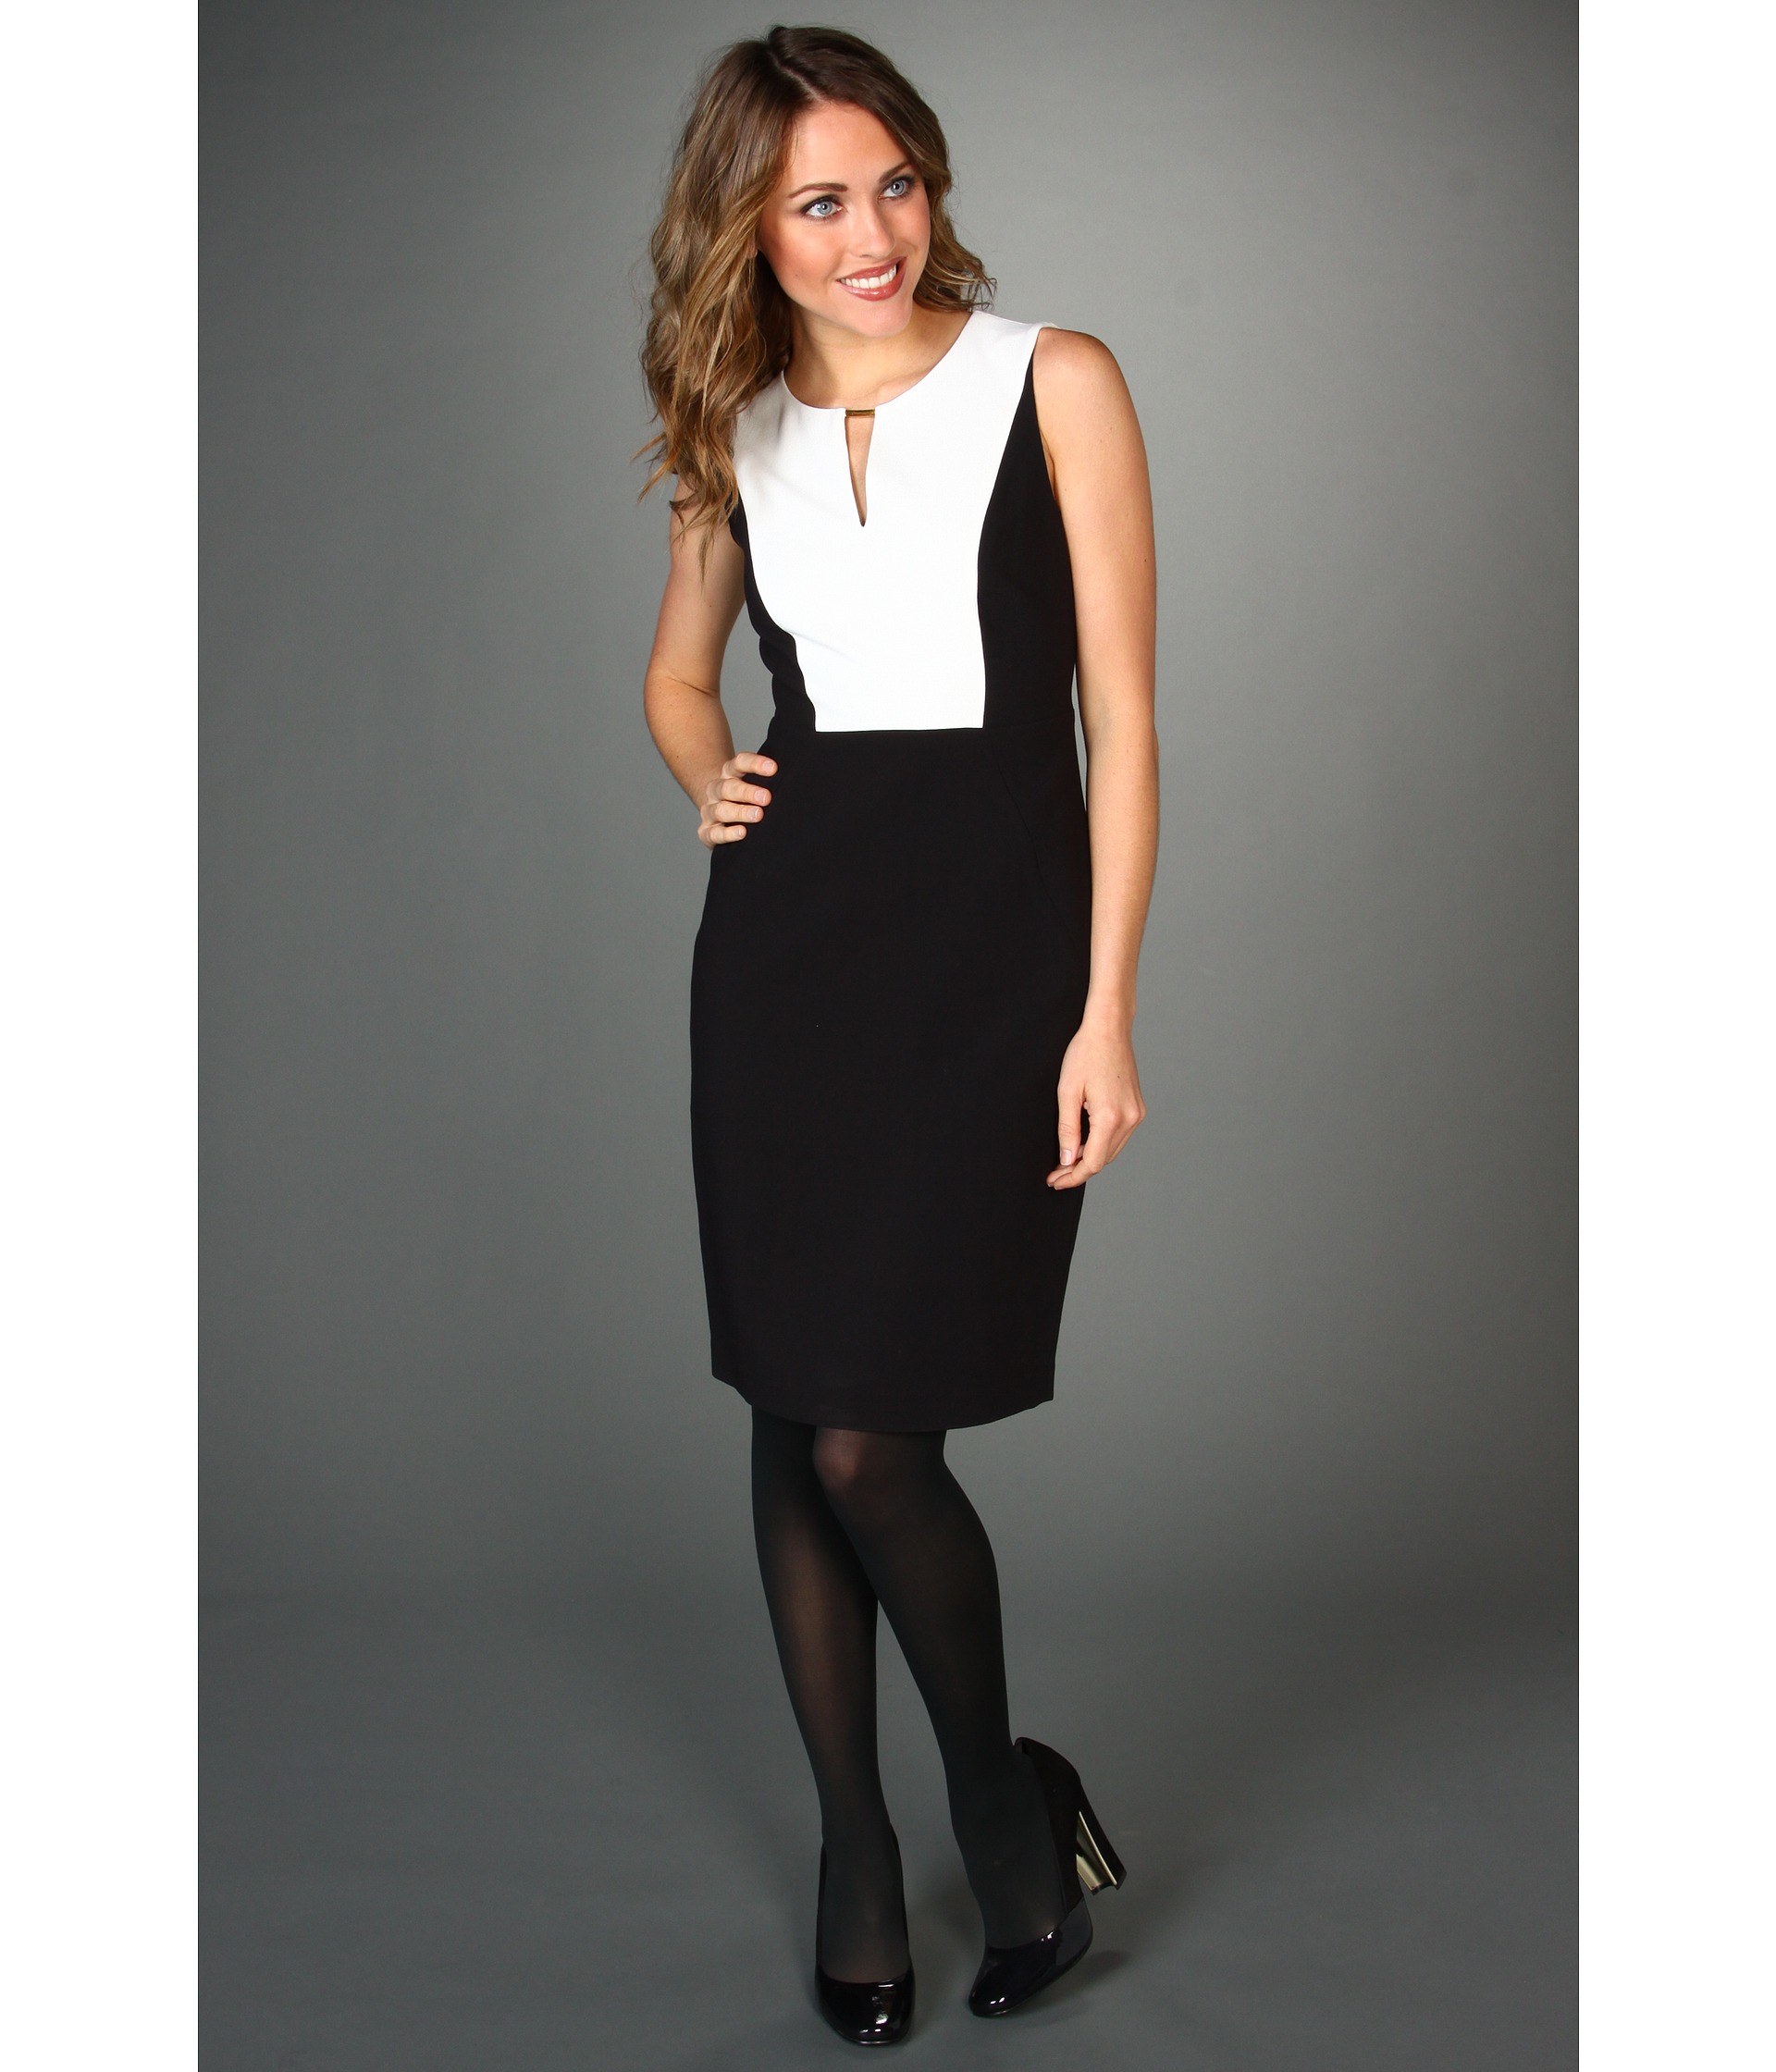 Calvin Klein Sleeveless Colorblocked Dress $96.99 ( 25% off MSRP $129